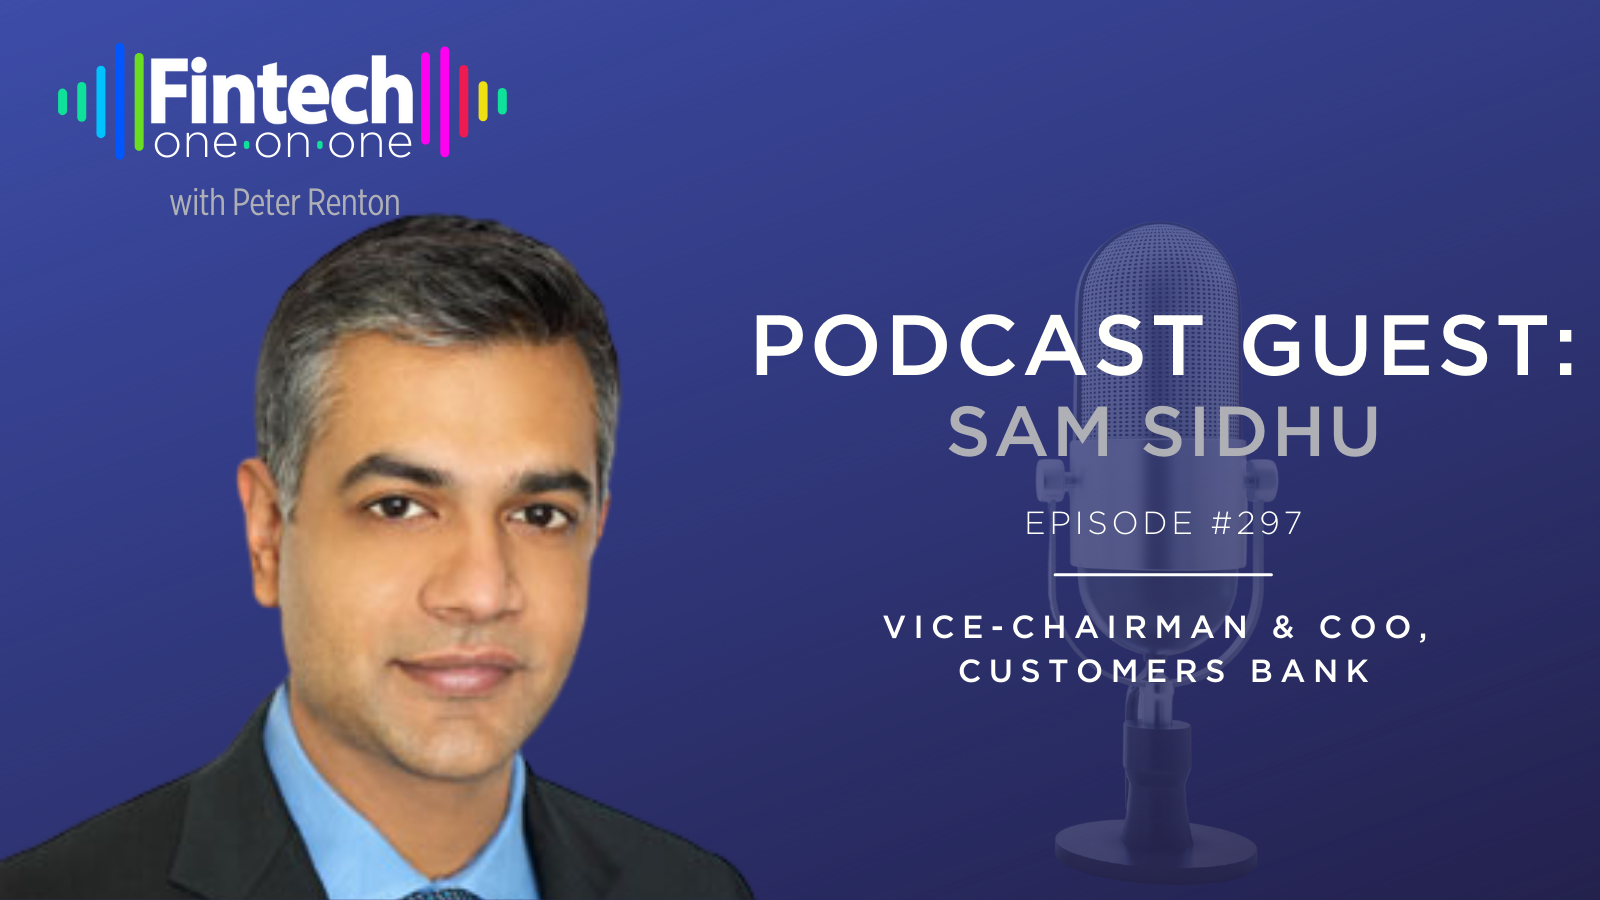 Sam Sidhu, Vice Chairman and CEO of Customers Bank